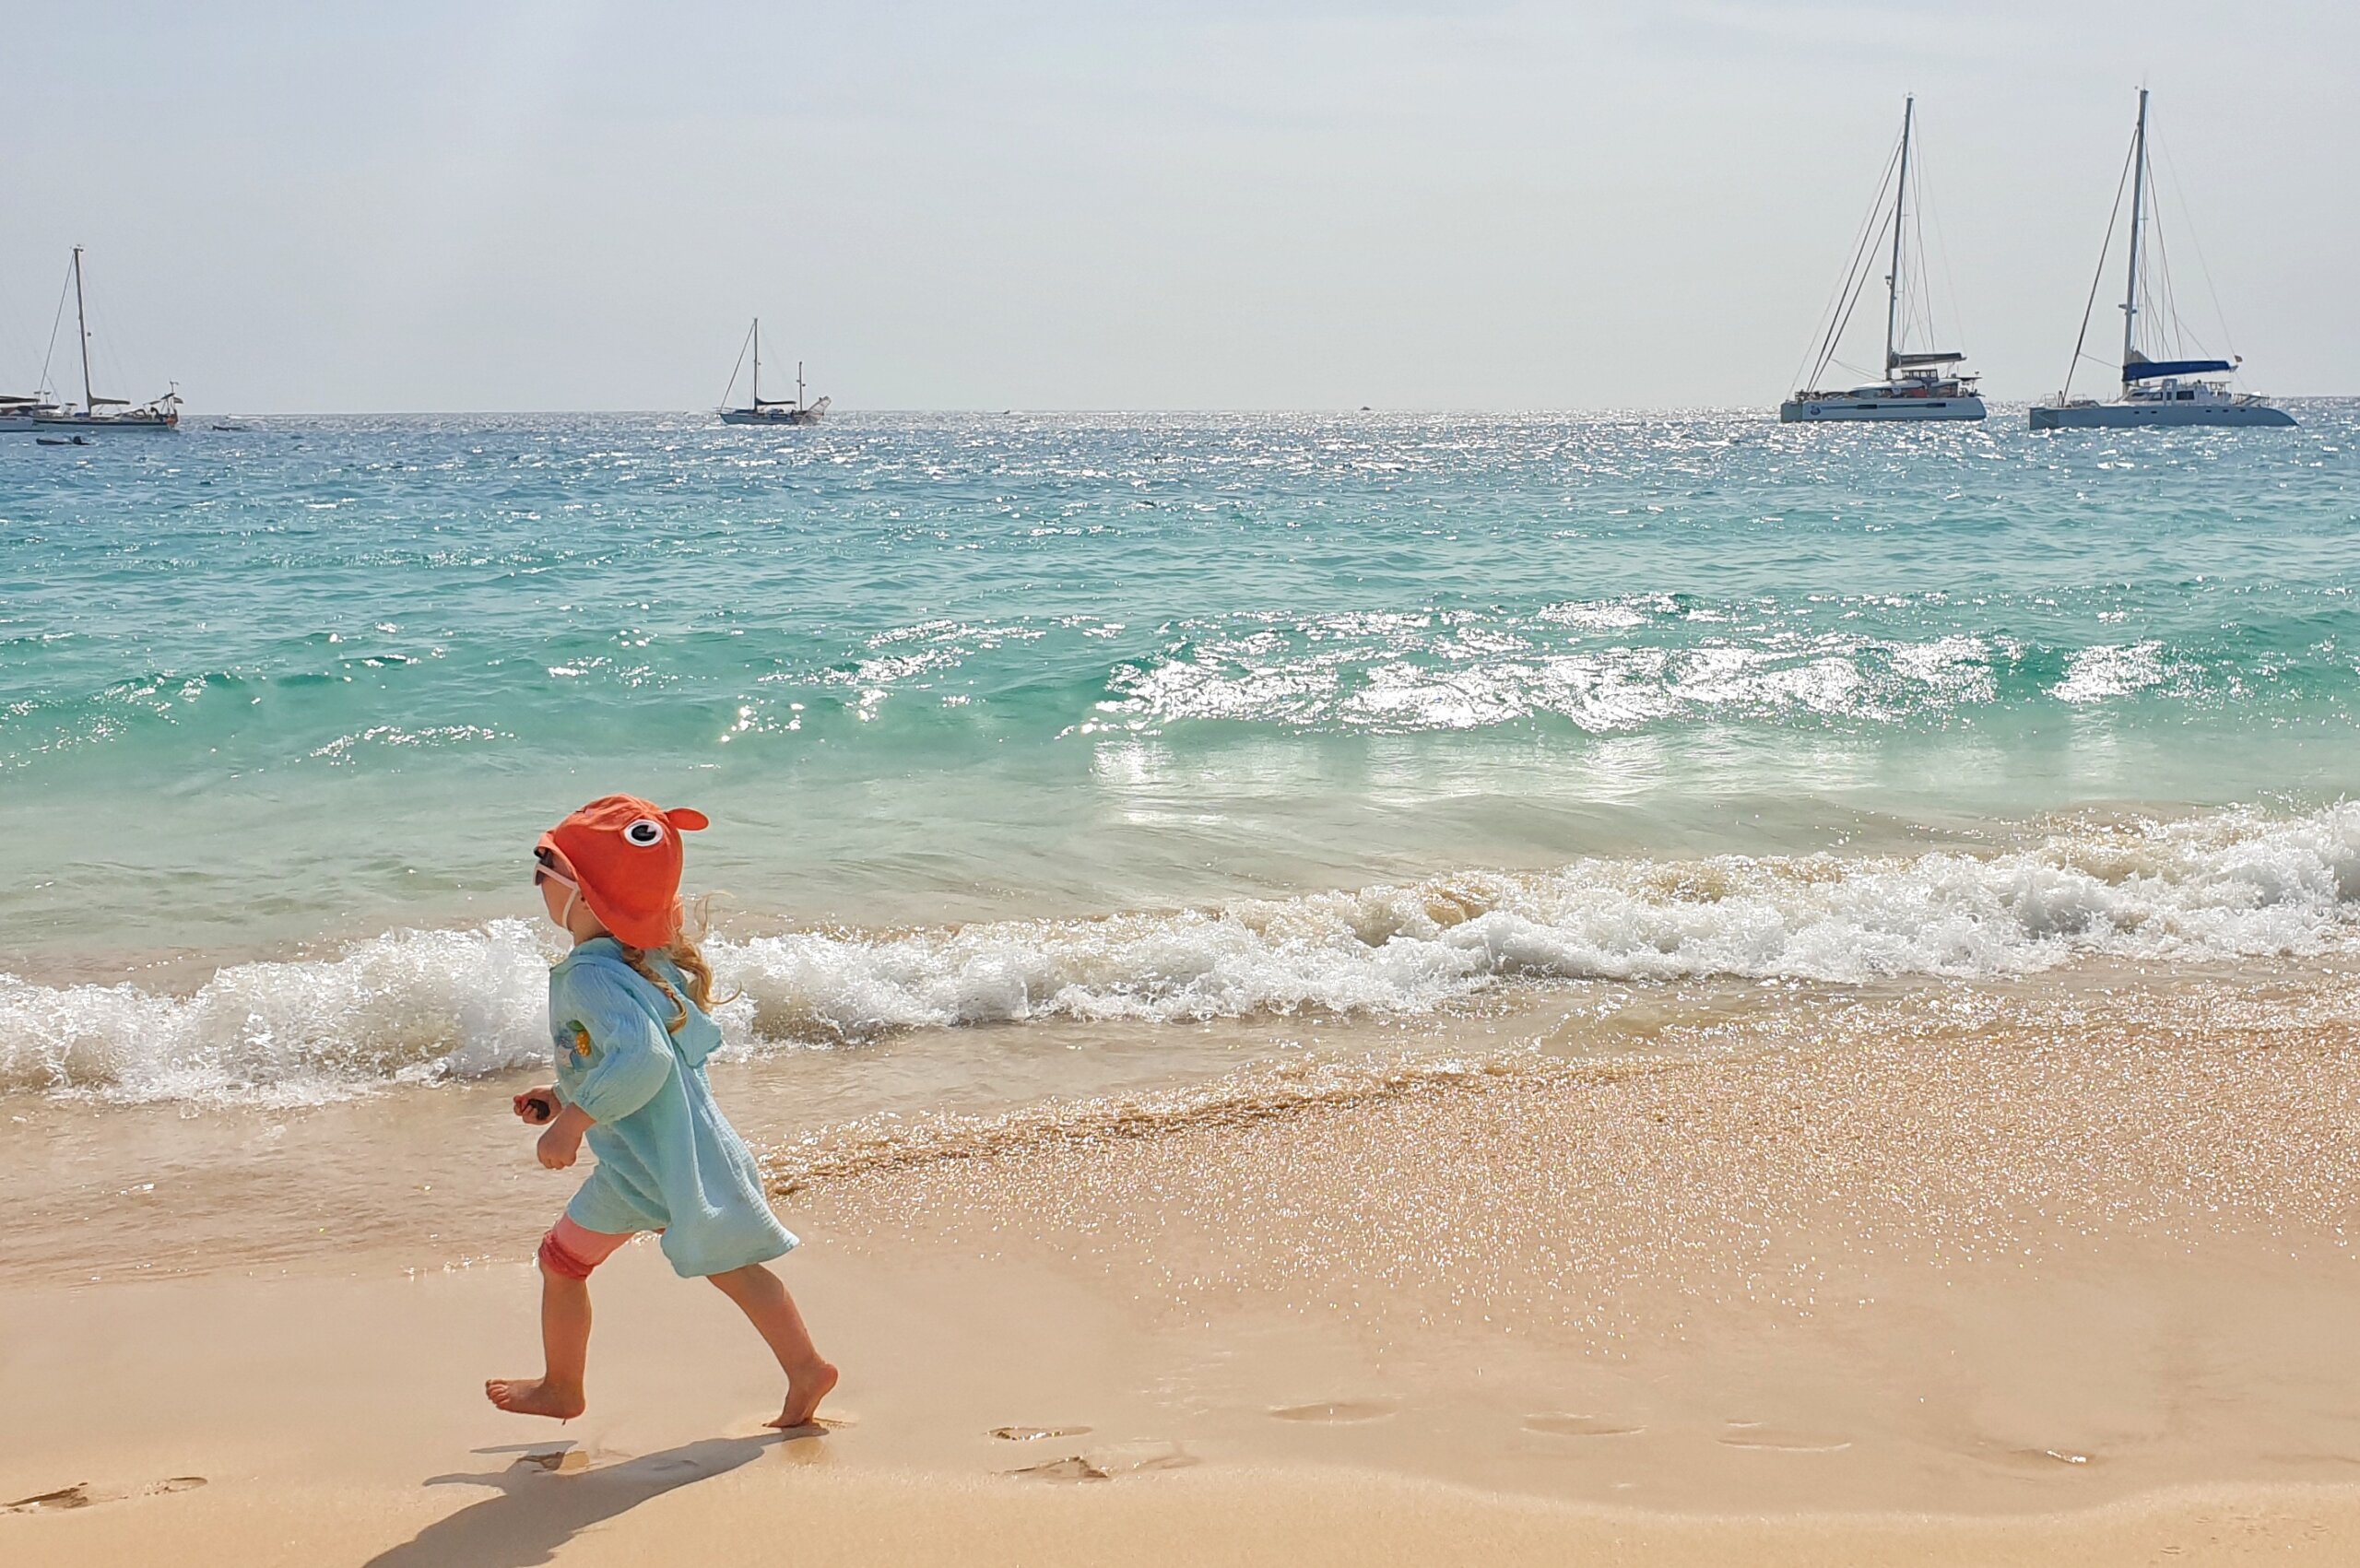 Cap Verde – exotic getaway 3,5 hours from Europe